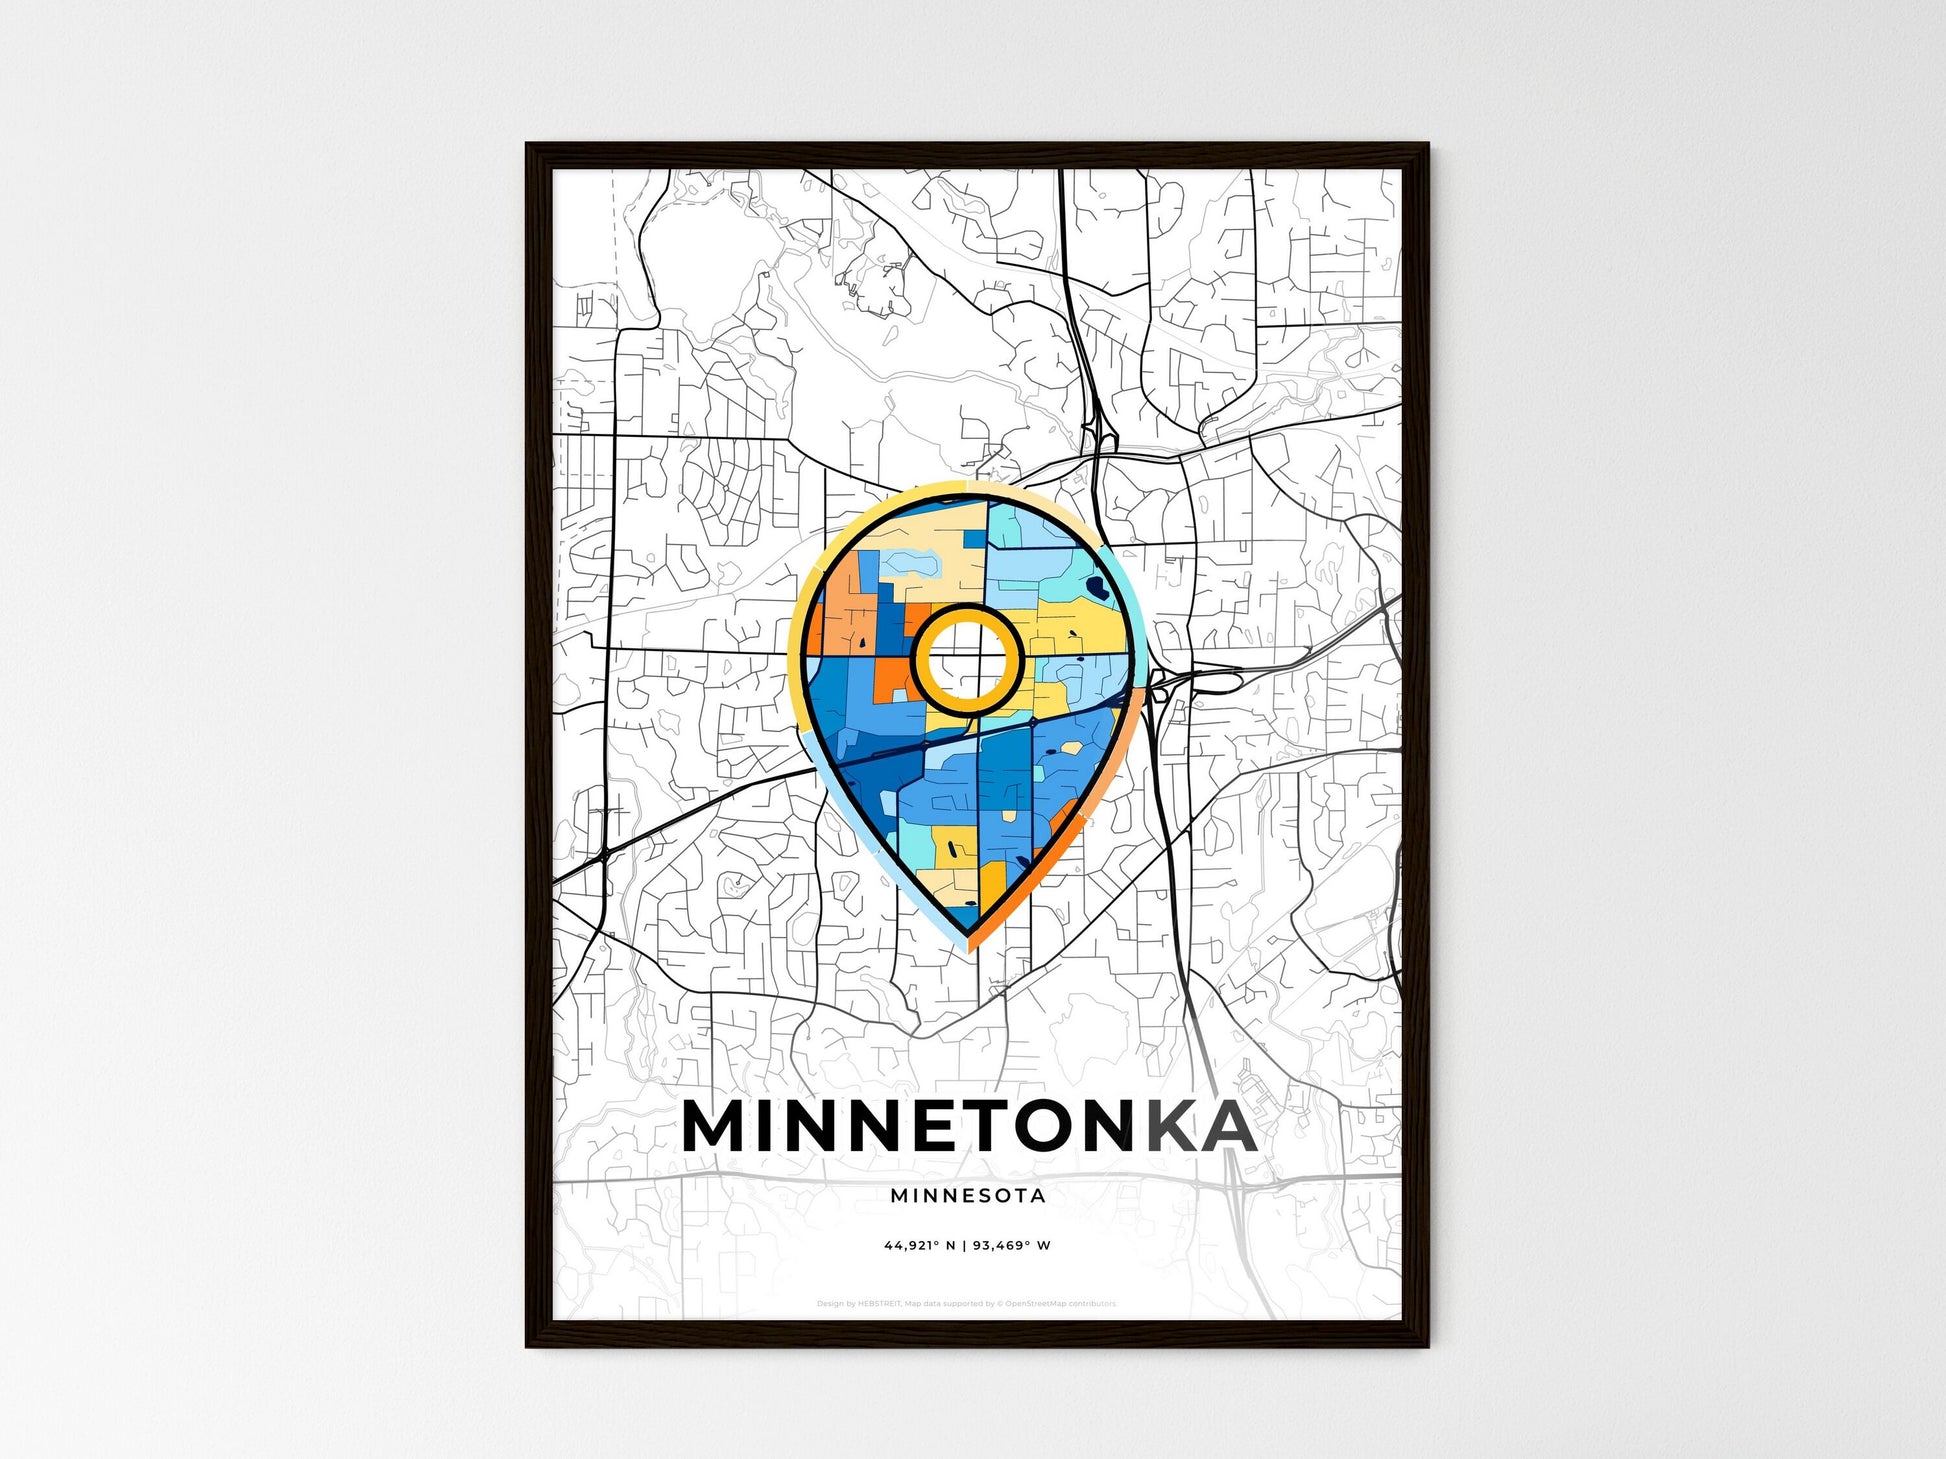 MINNETONKA MINNESOTA minimal art map with a colorful icon. Style 1